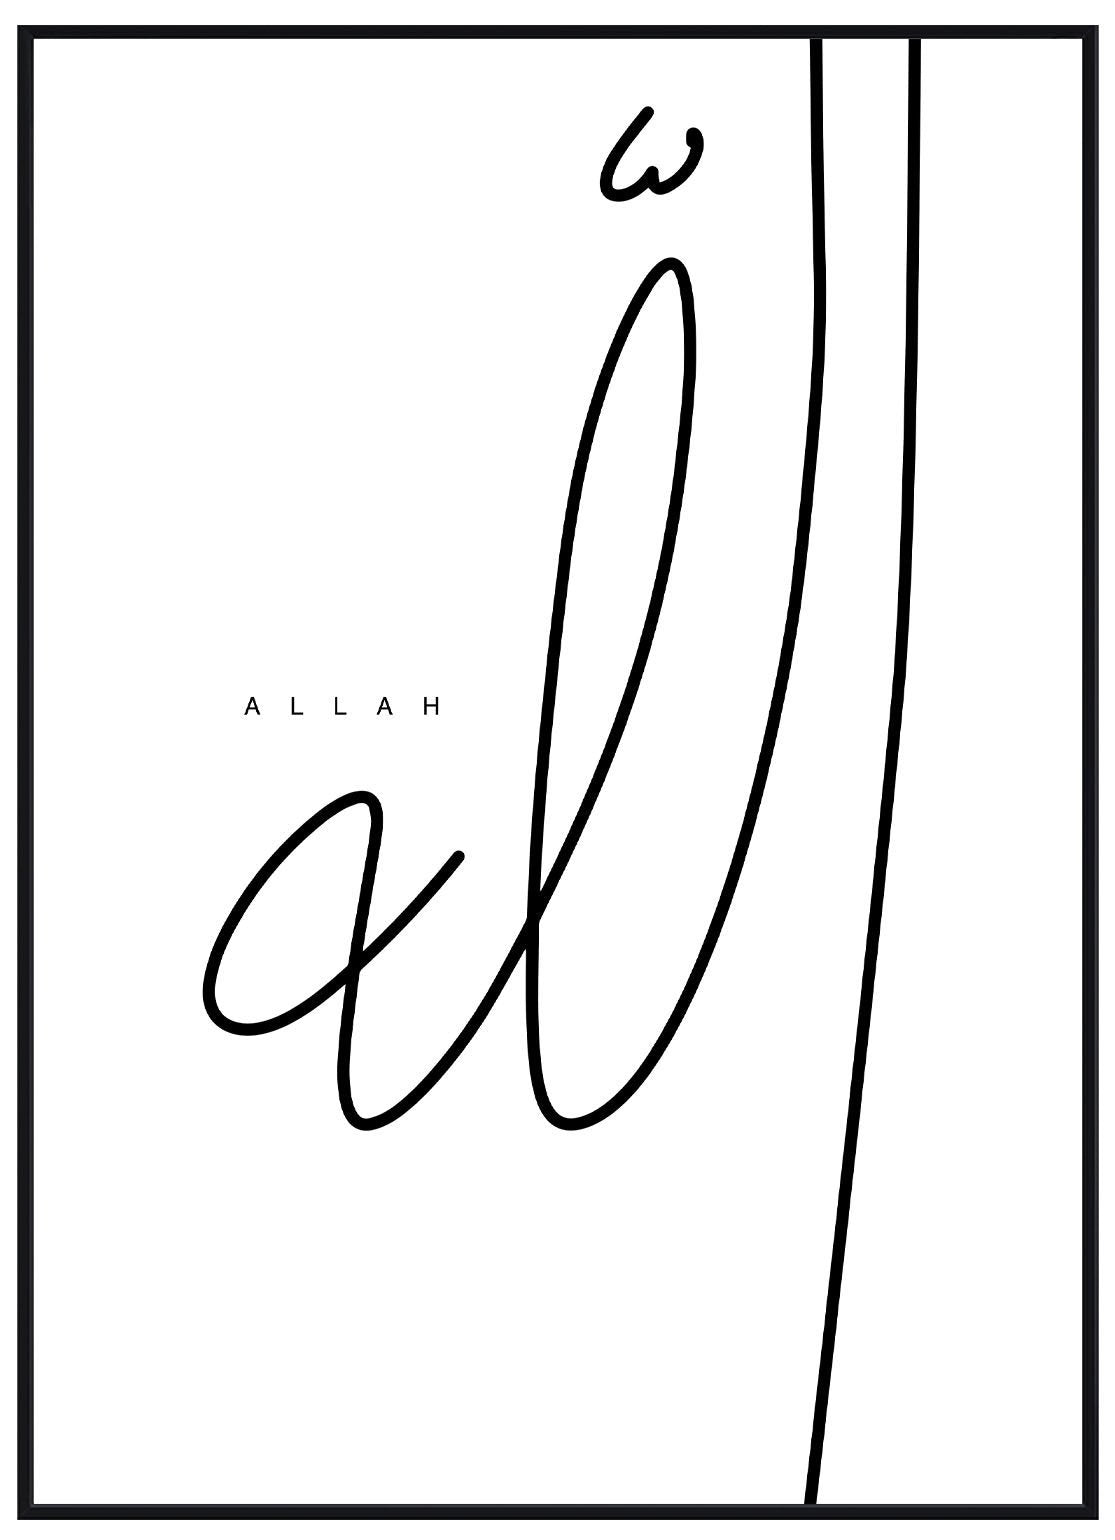 Allah Kalligraphie No2 - Avemfactory